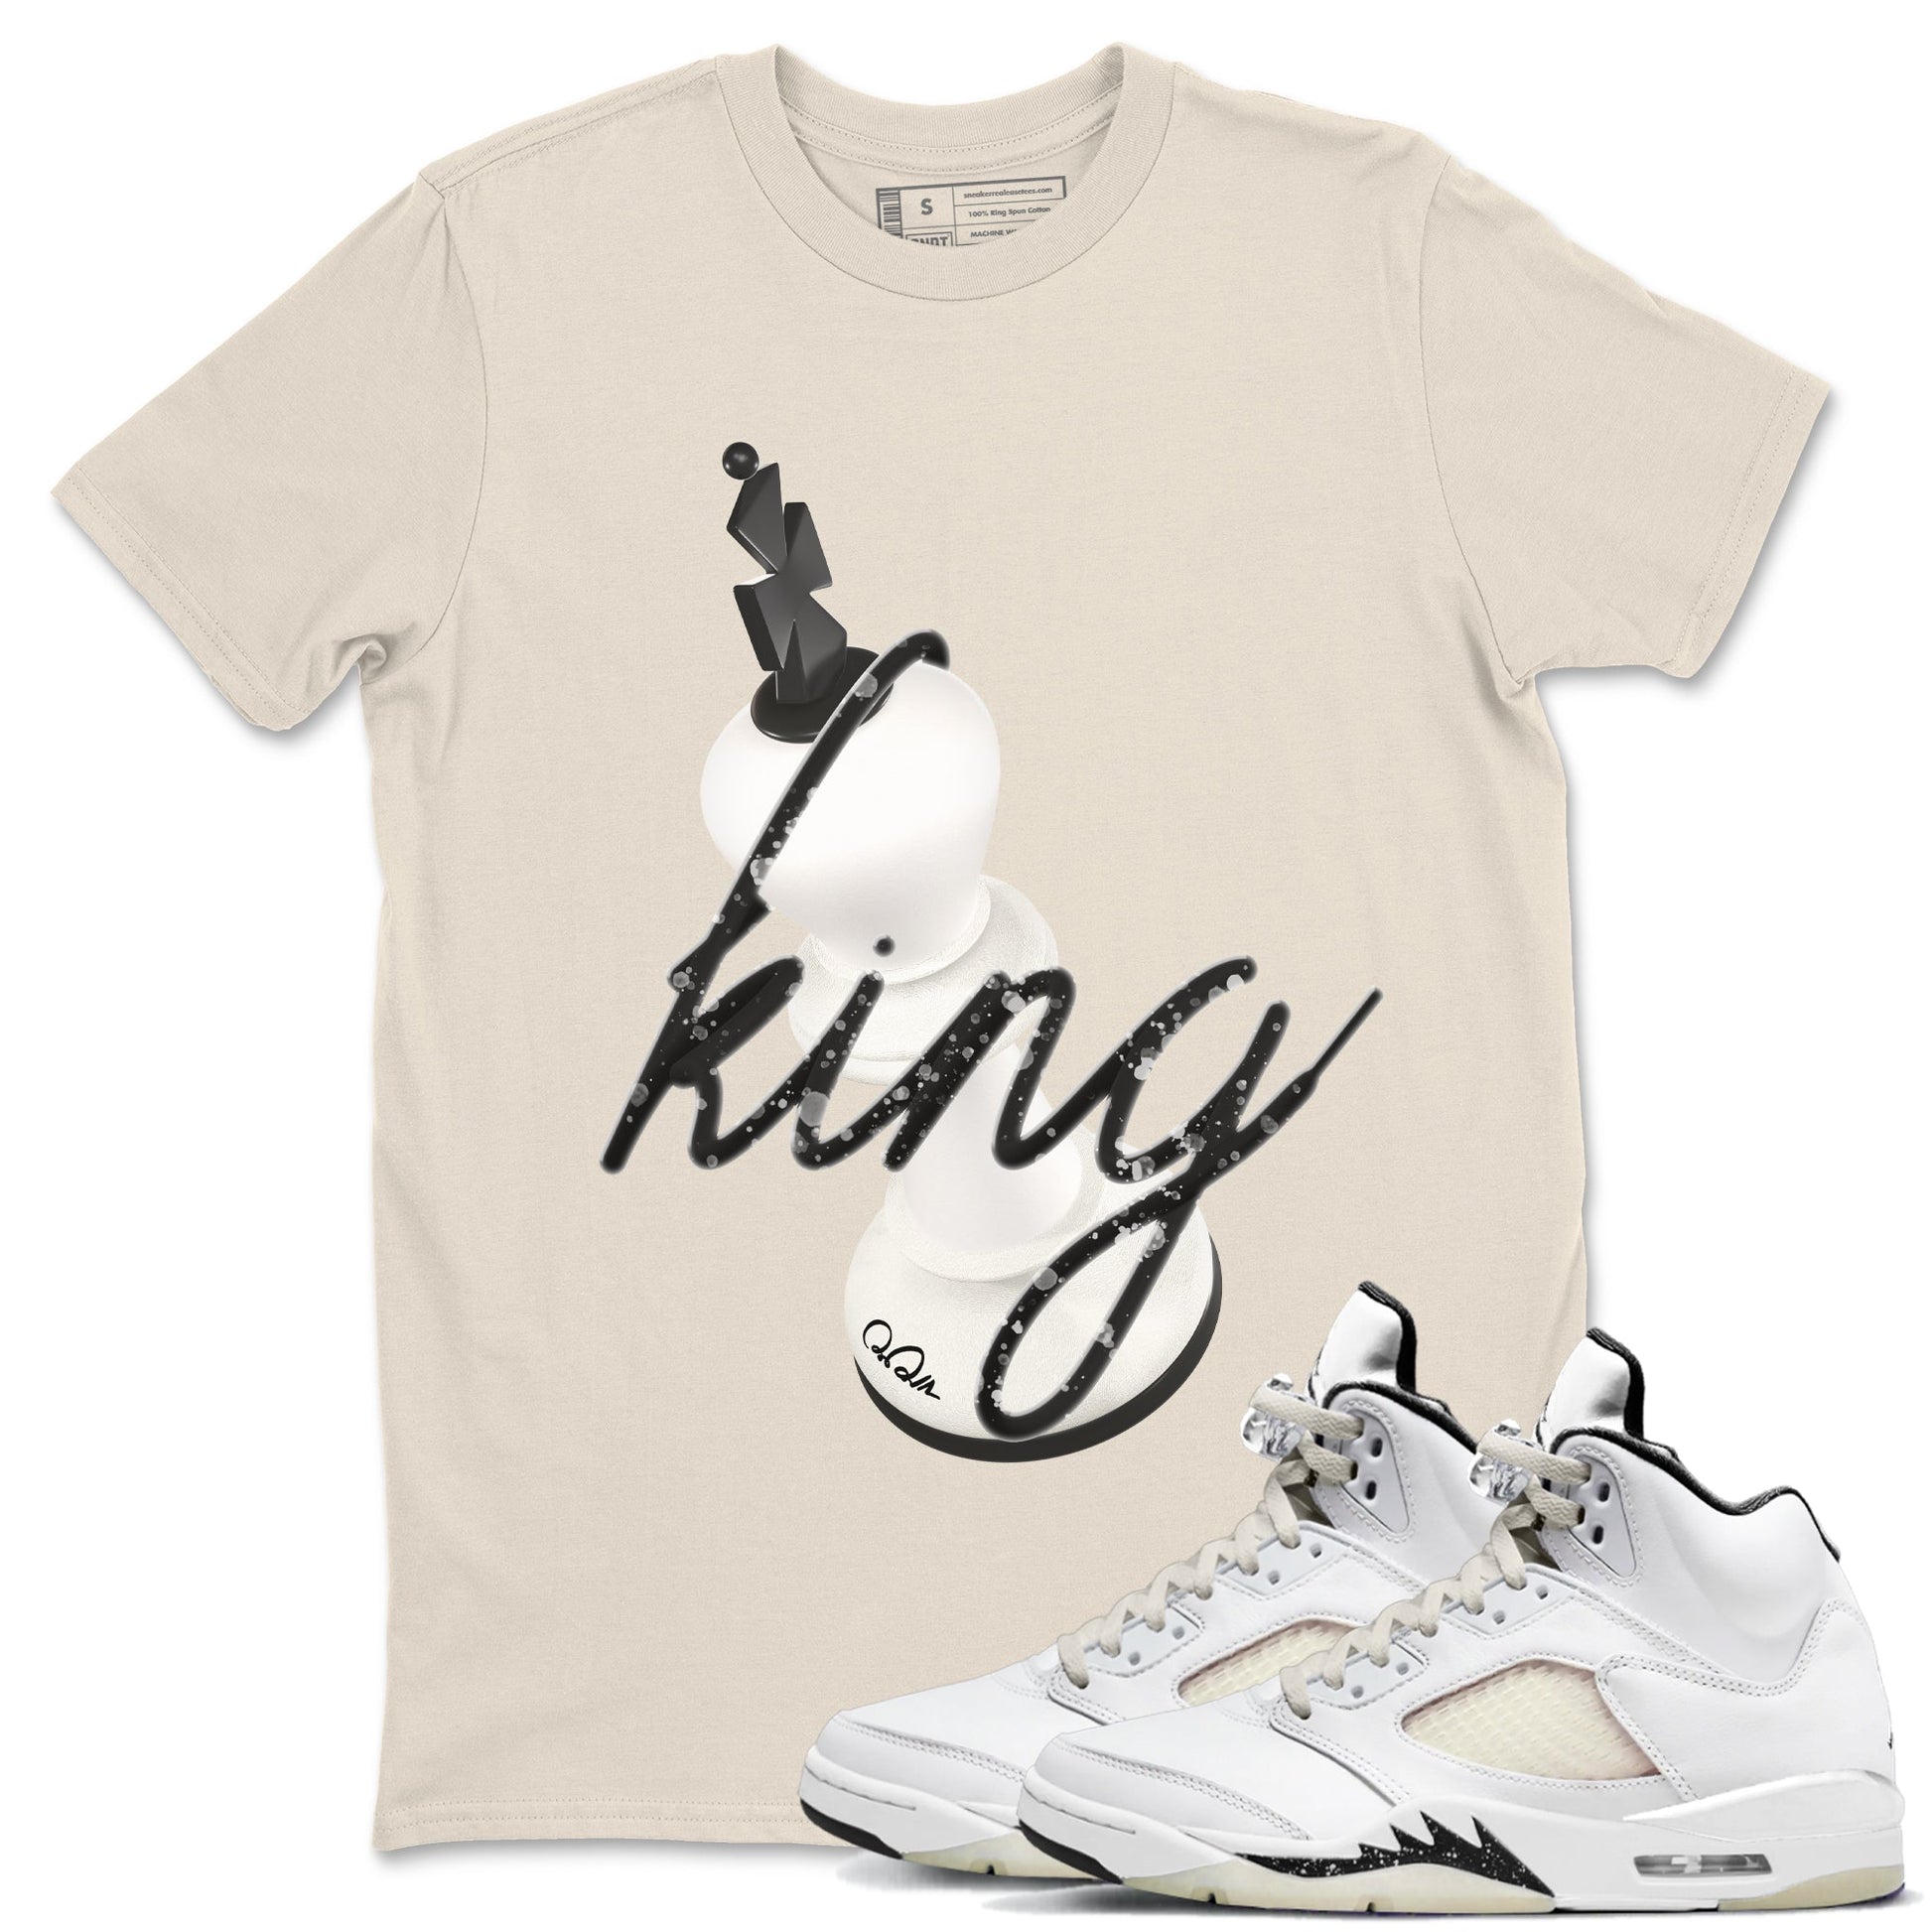 5s Sail shirt to match jordans 3D King sneaker tees Air Jordan 5 Sail SNRT Sneaker Release Tees unisex cotton Natural 1 crew neck shirt